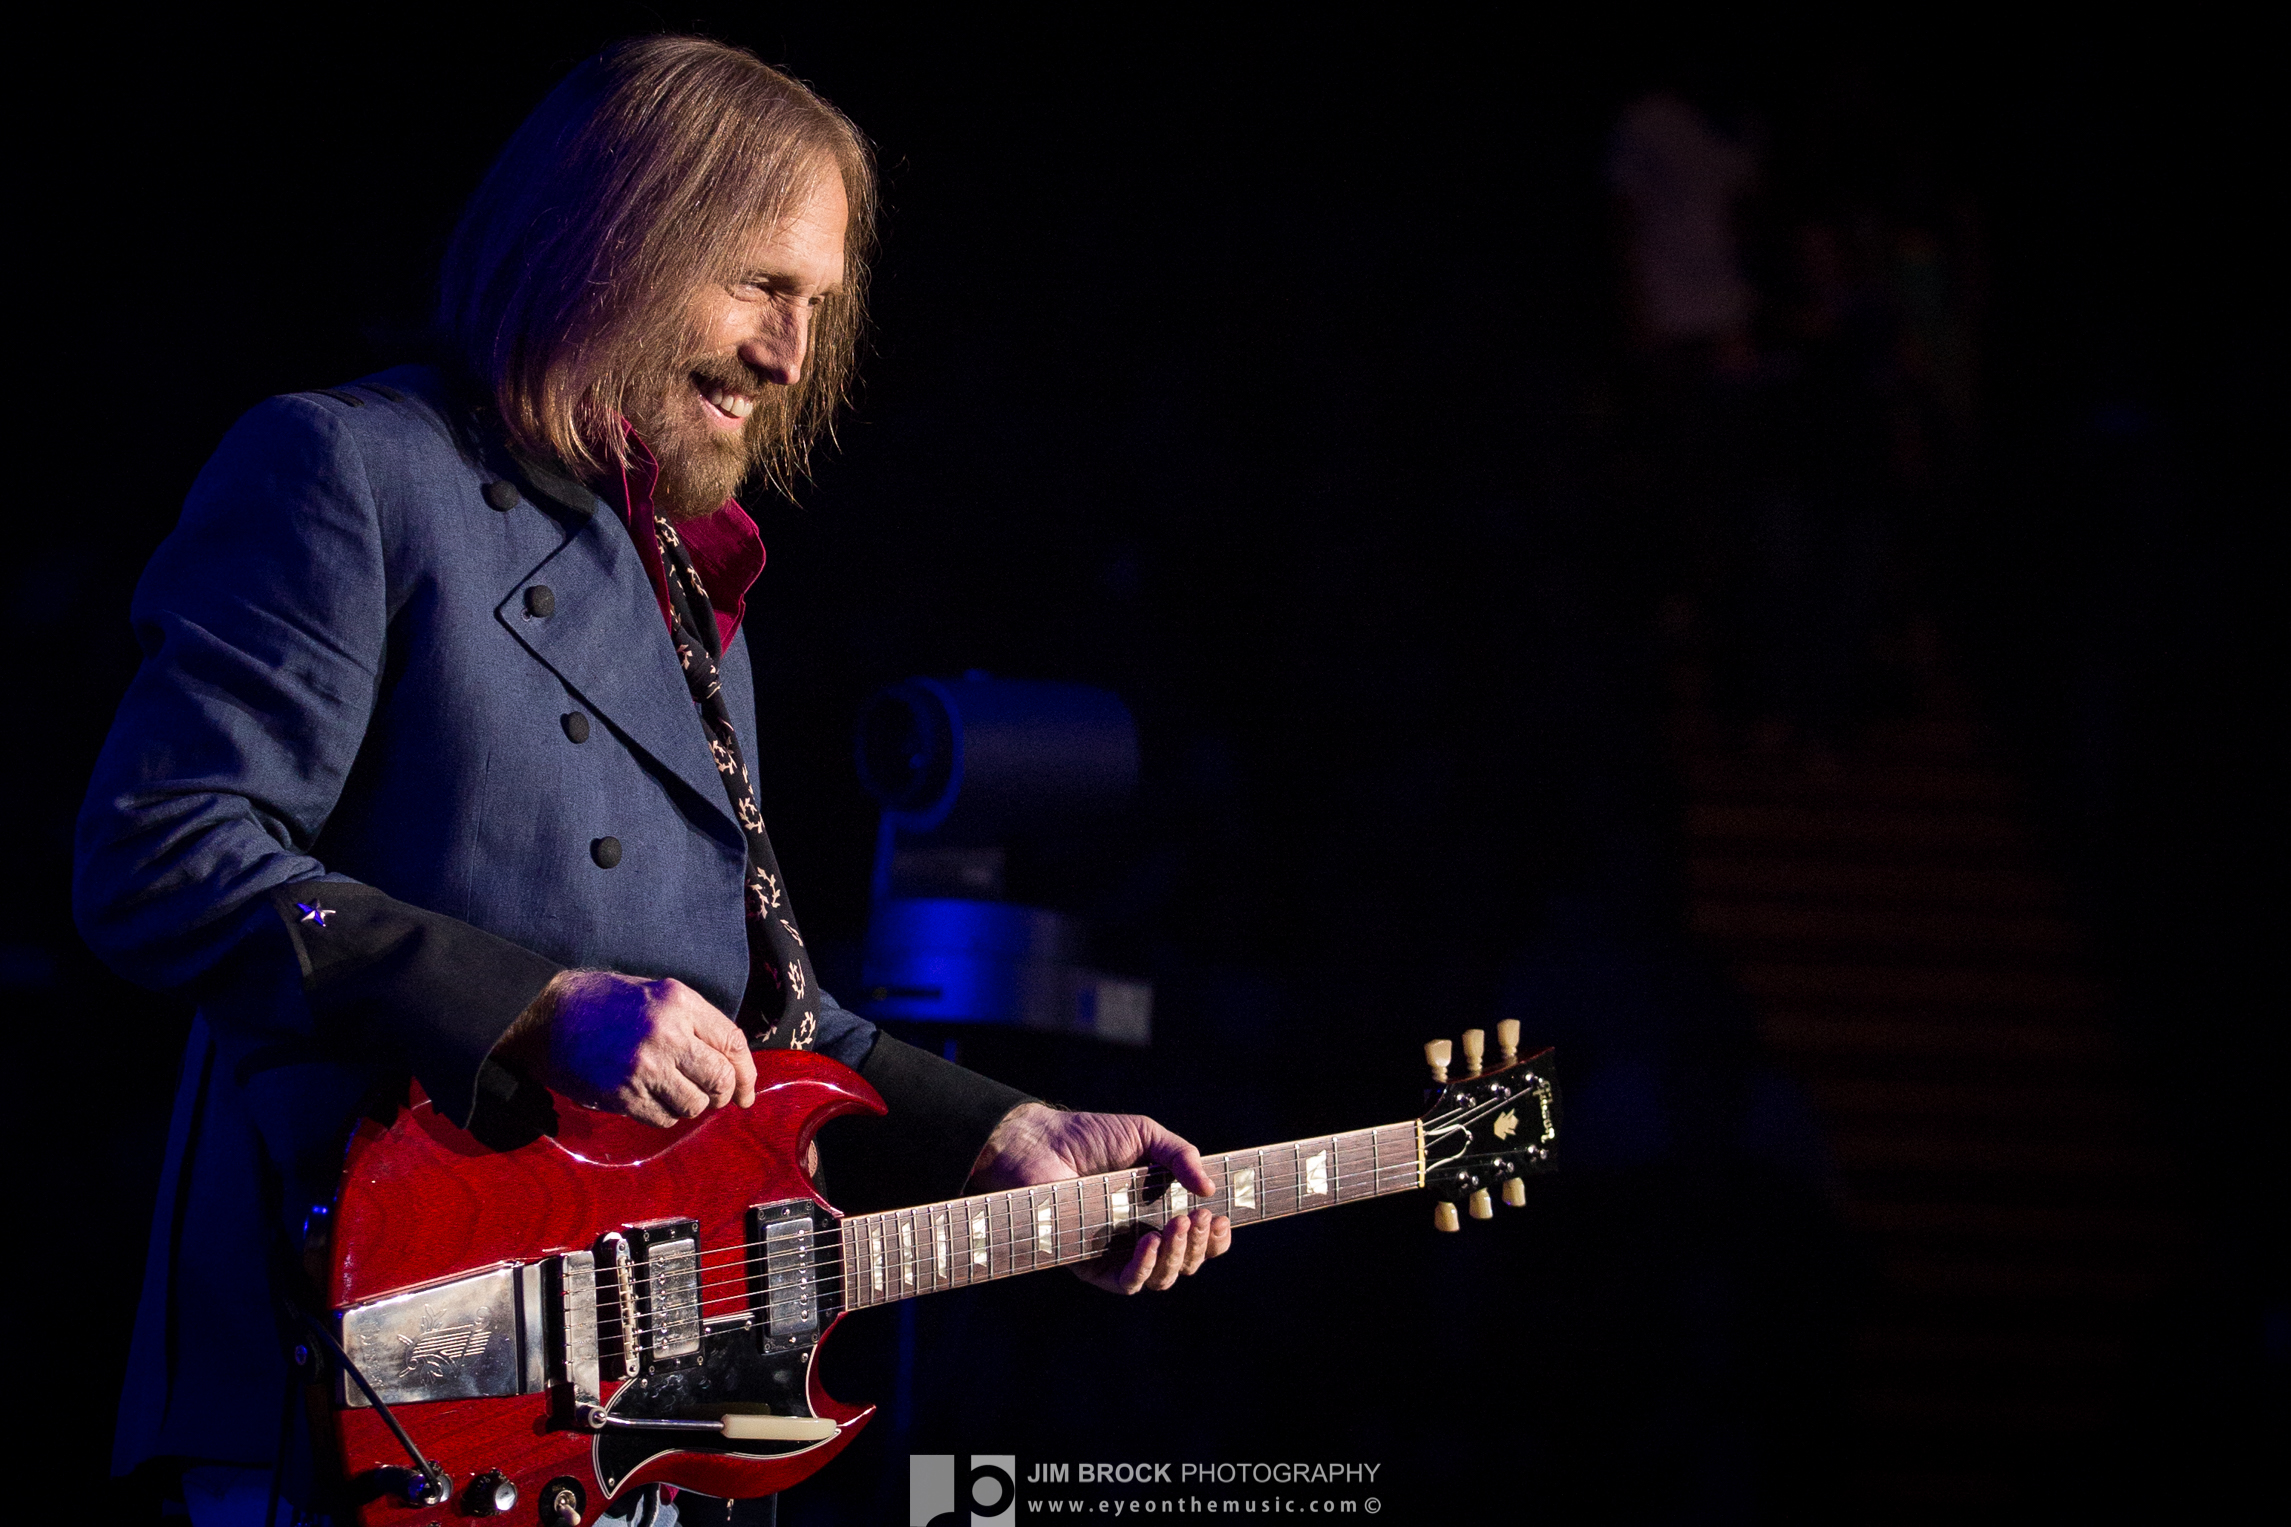 CONCERT RECAP / PHOTOS: Tom Petty & The Heartbreakers with Steve Winwood @ The Forum, LA 10.10.14